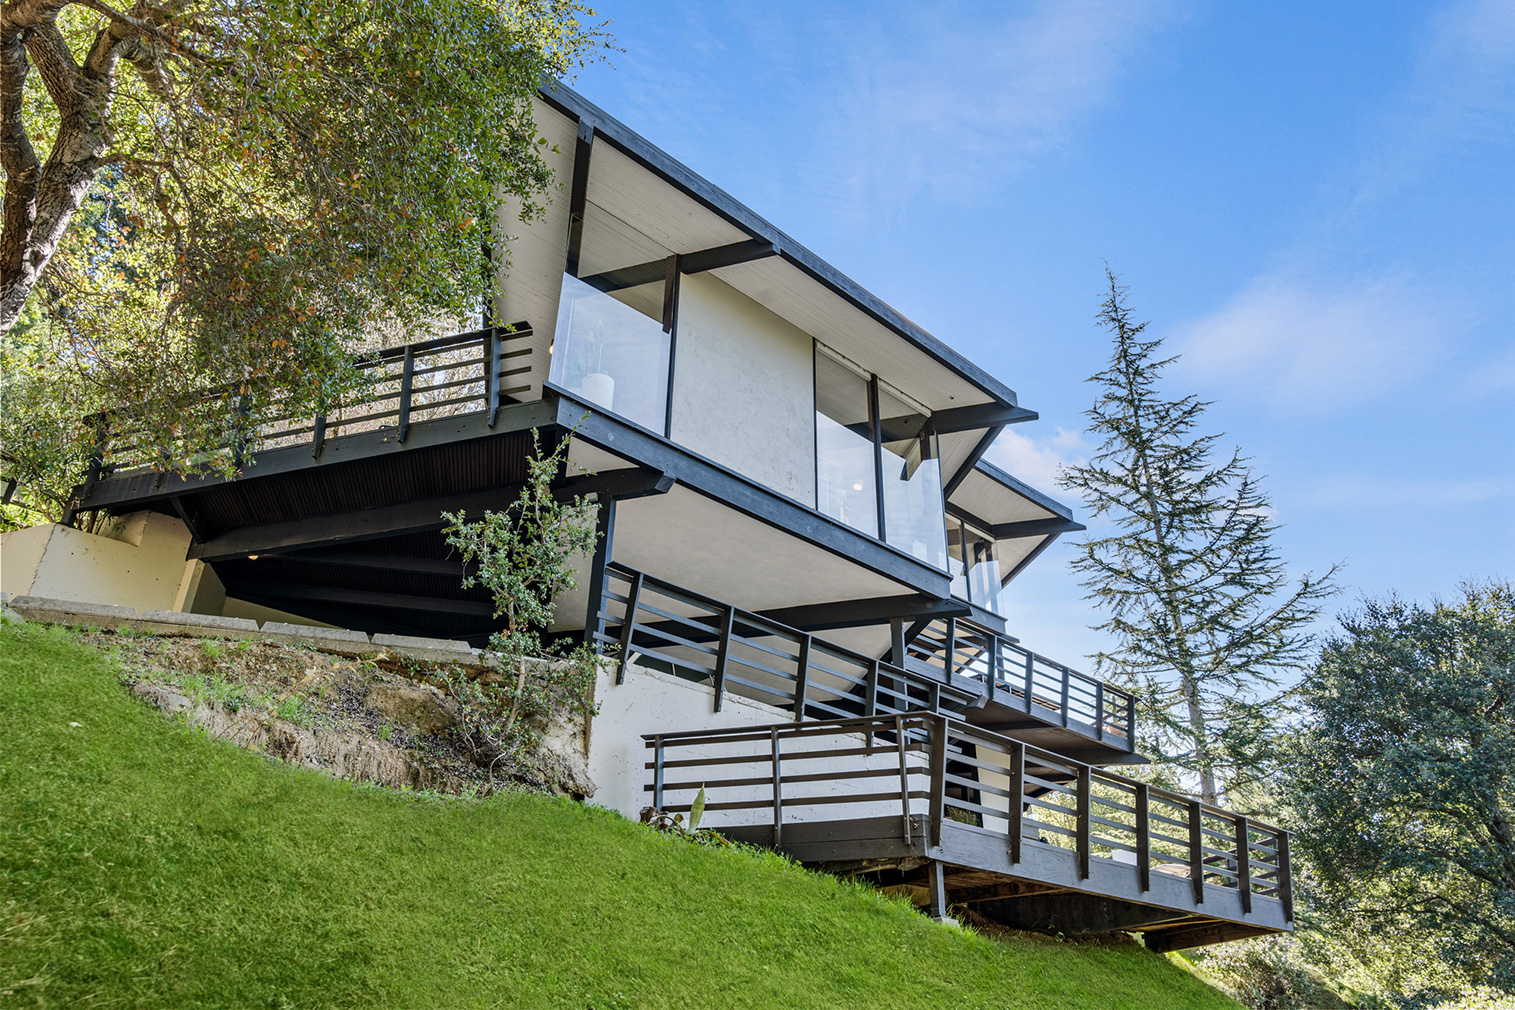 Benjamin Fishstein’s midcentury modern house is for sale in California